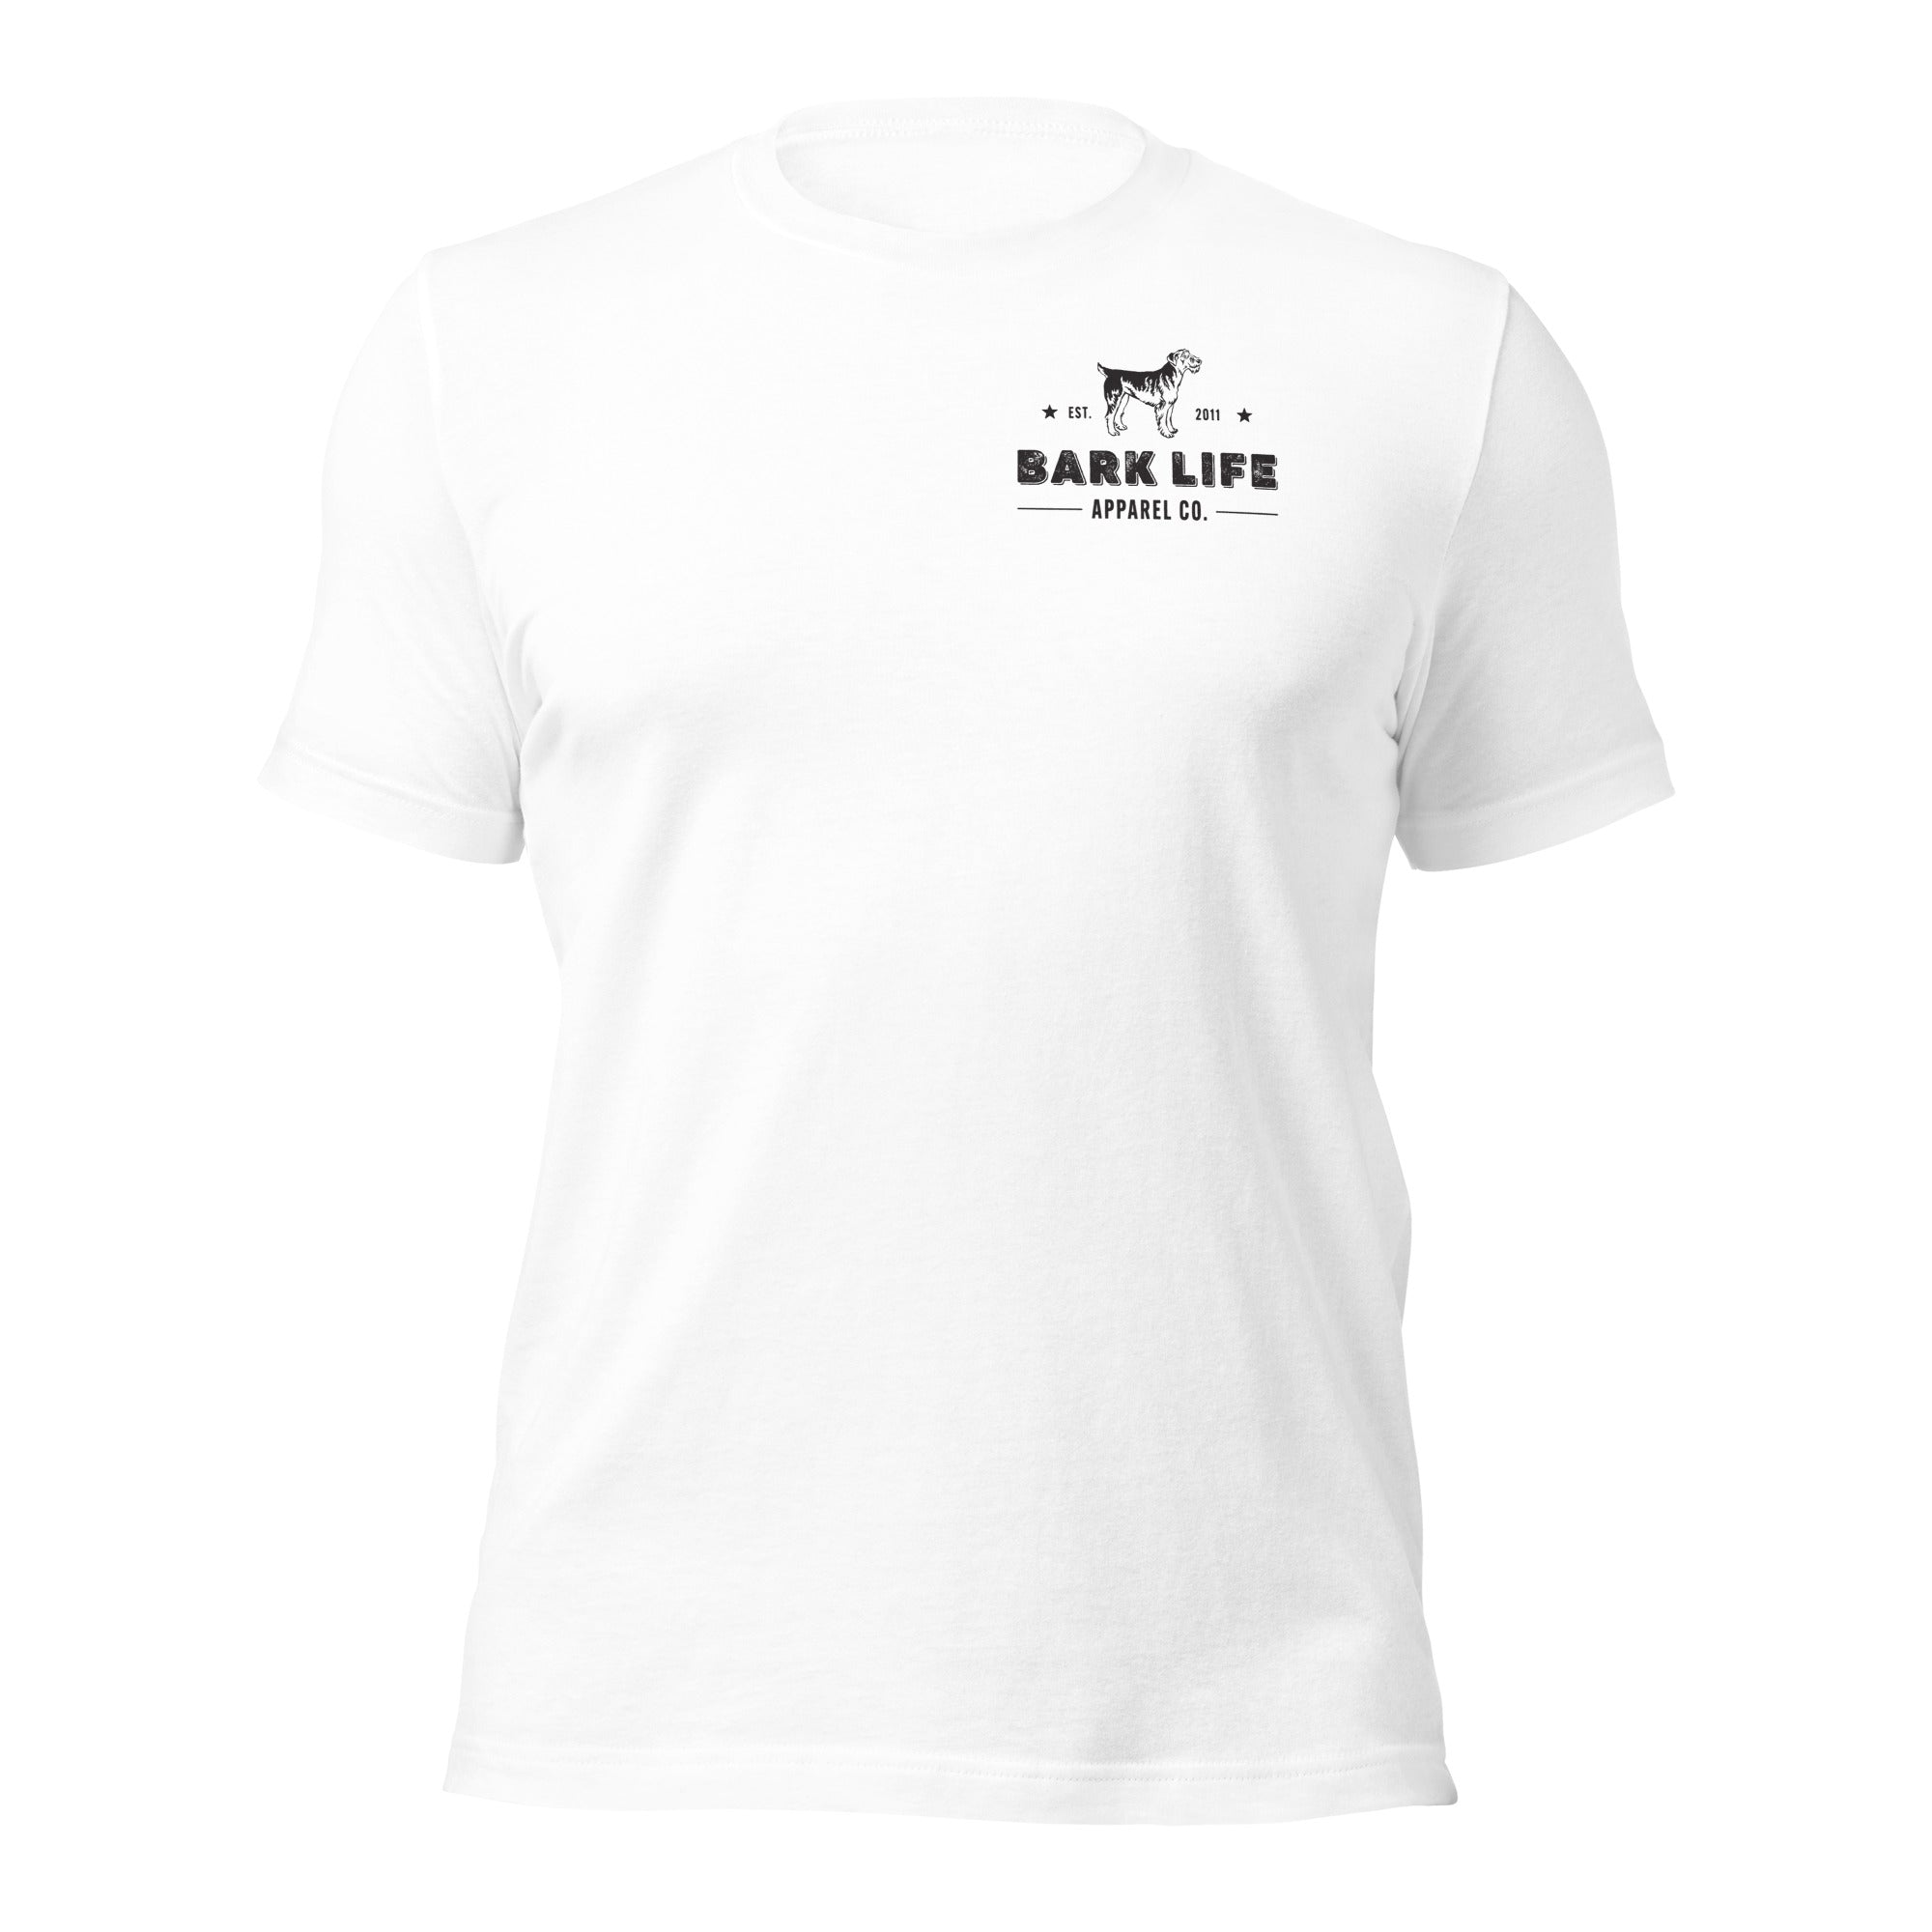 Airedale Terrier - Short Sleeve Cotton Tee  Shirt